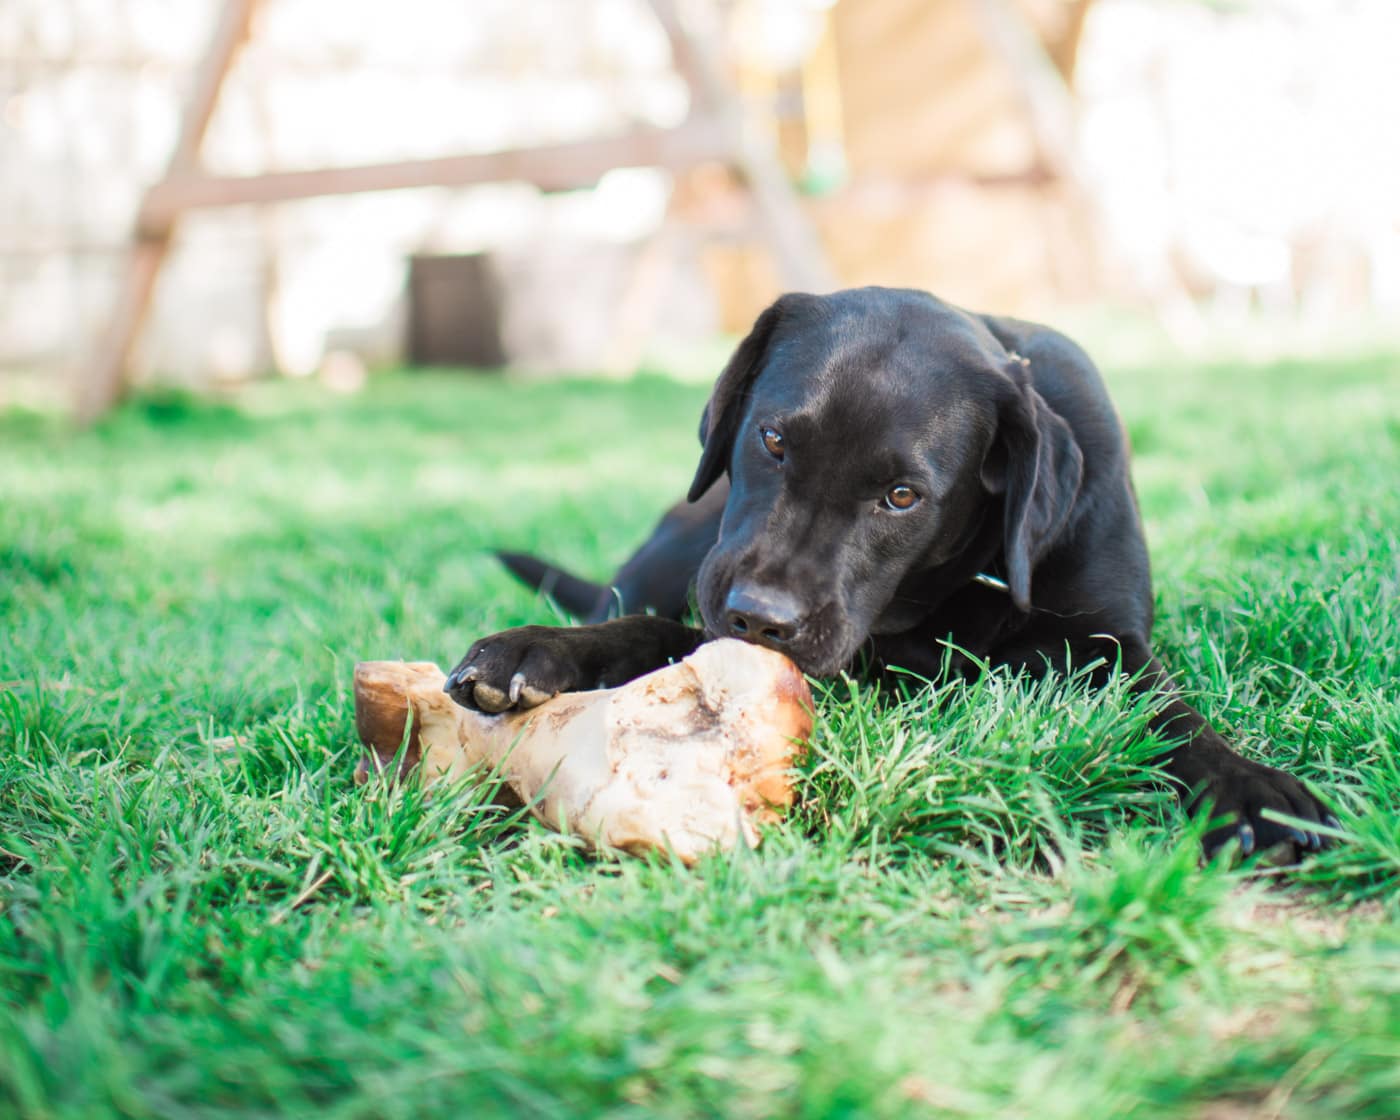 Healthy dog eating a bone